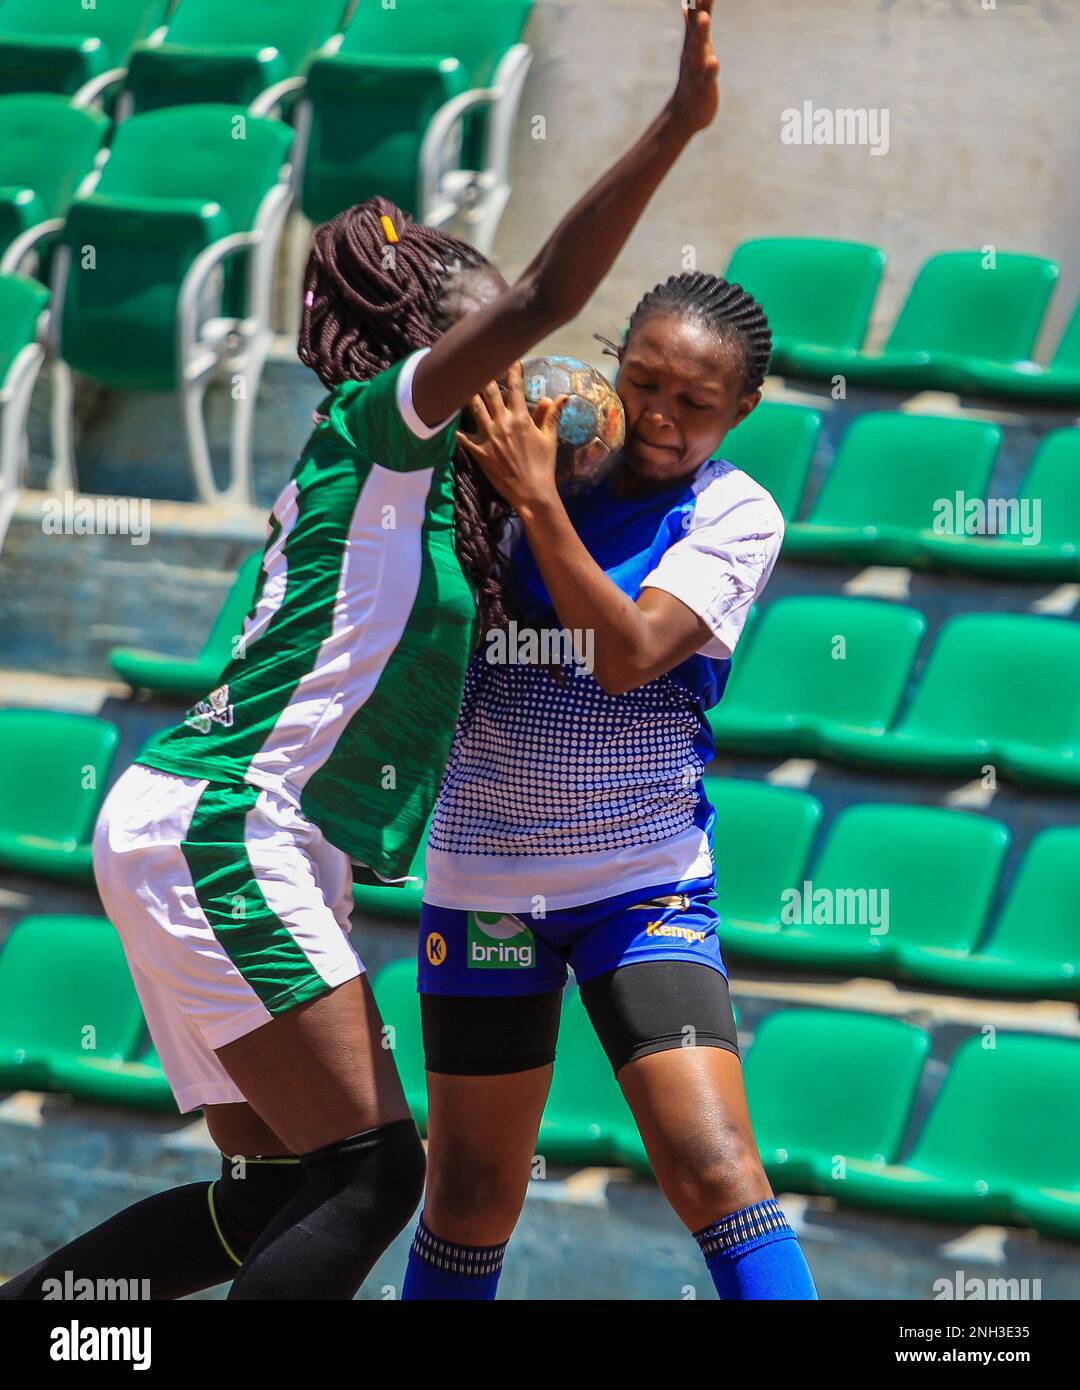 The Kenya Handball Federation National women league match between NCPB and New Hope at Nyayo National Stadium in Nyayo, Kenya. Stock Photo